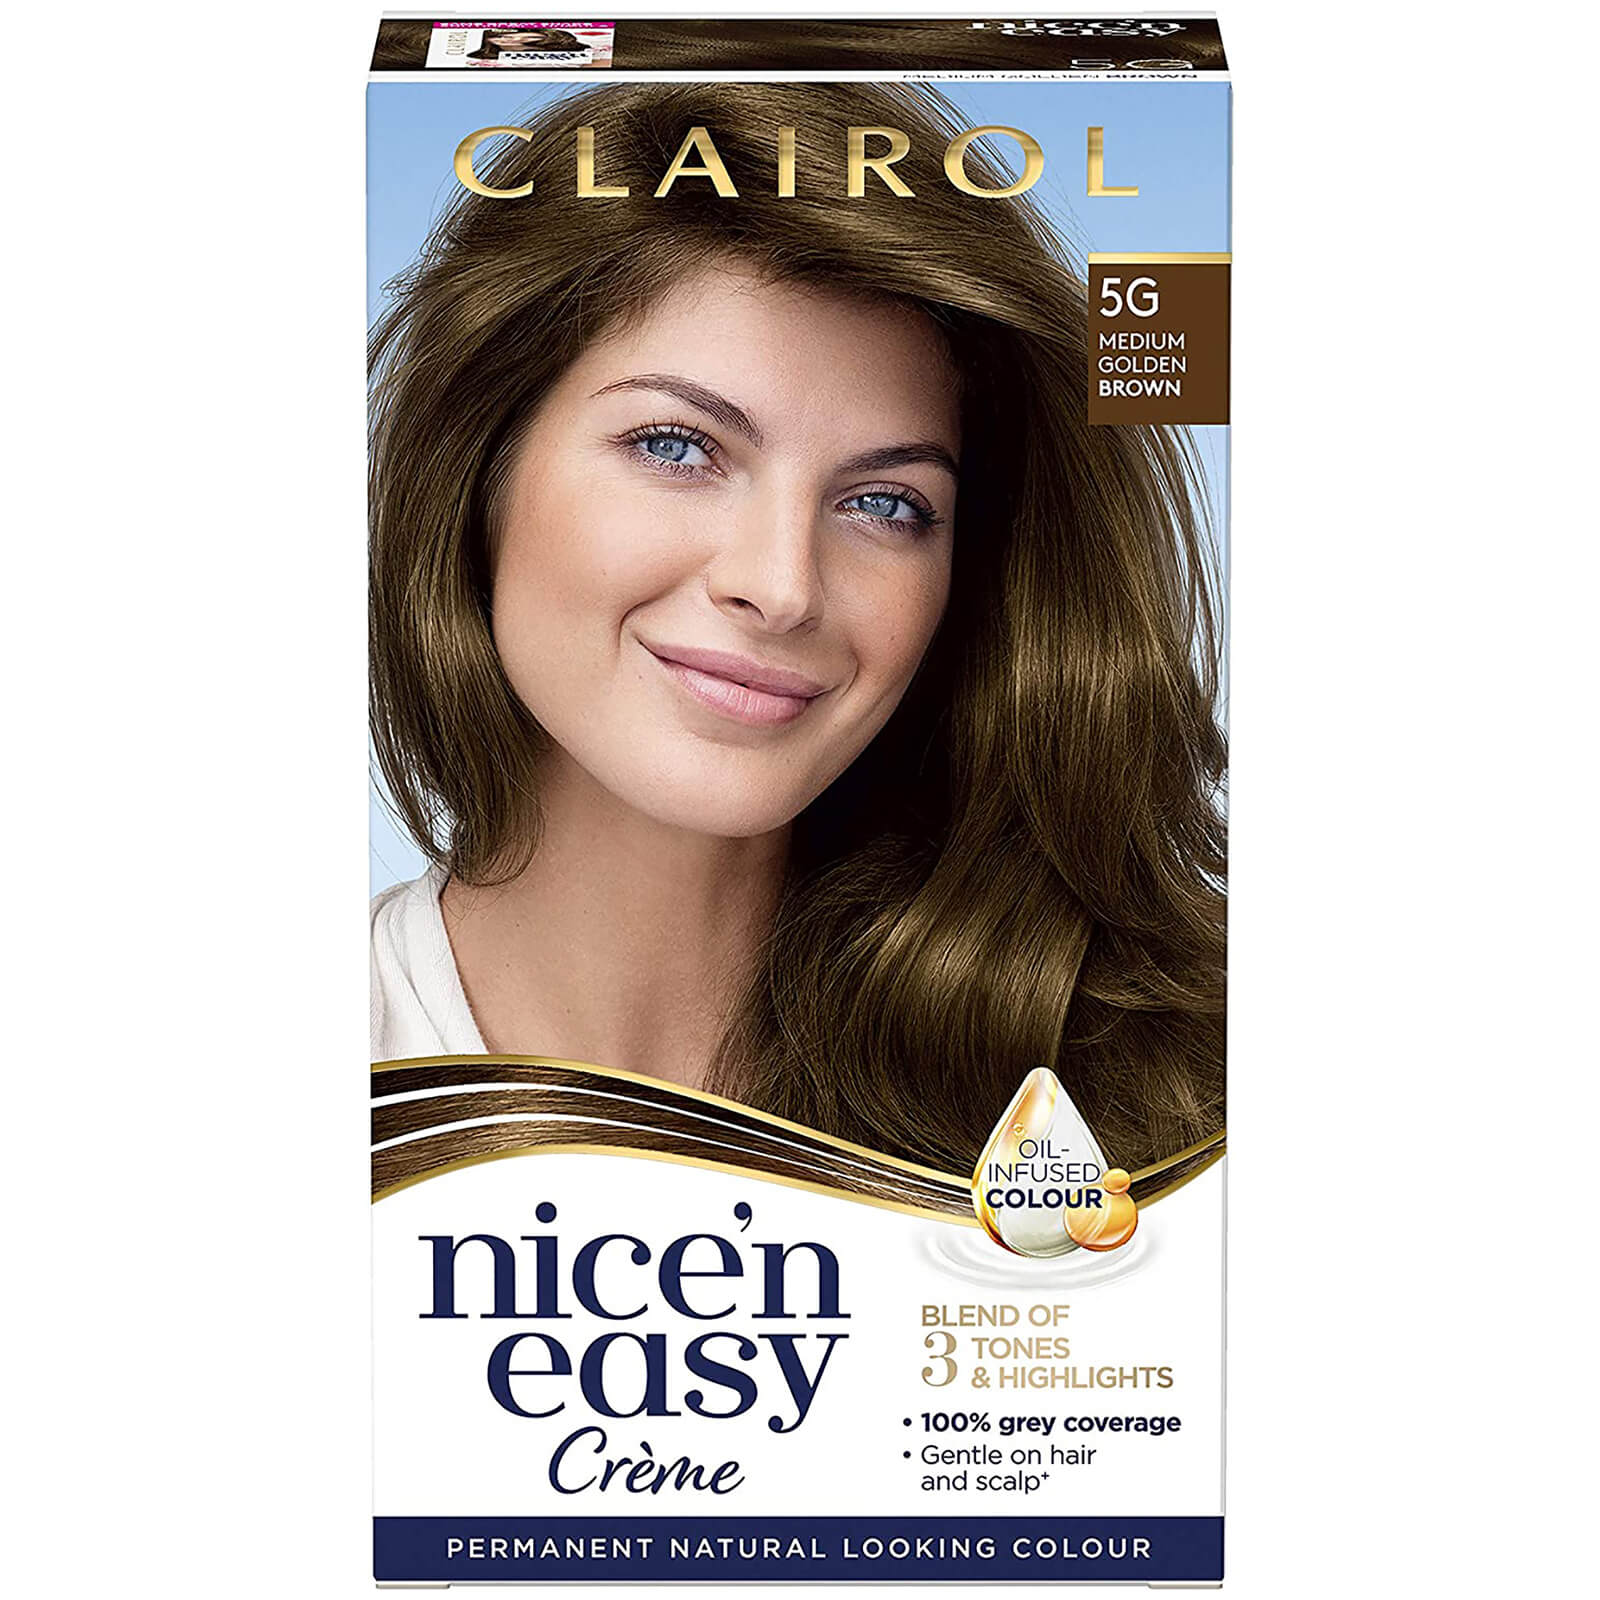 Clairol Nice' n Easy Crème Natural Looking Oil Infused Permanent Hair Dye 177ml (Various Shades) - 5G Medium Golden Brown